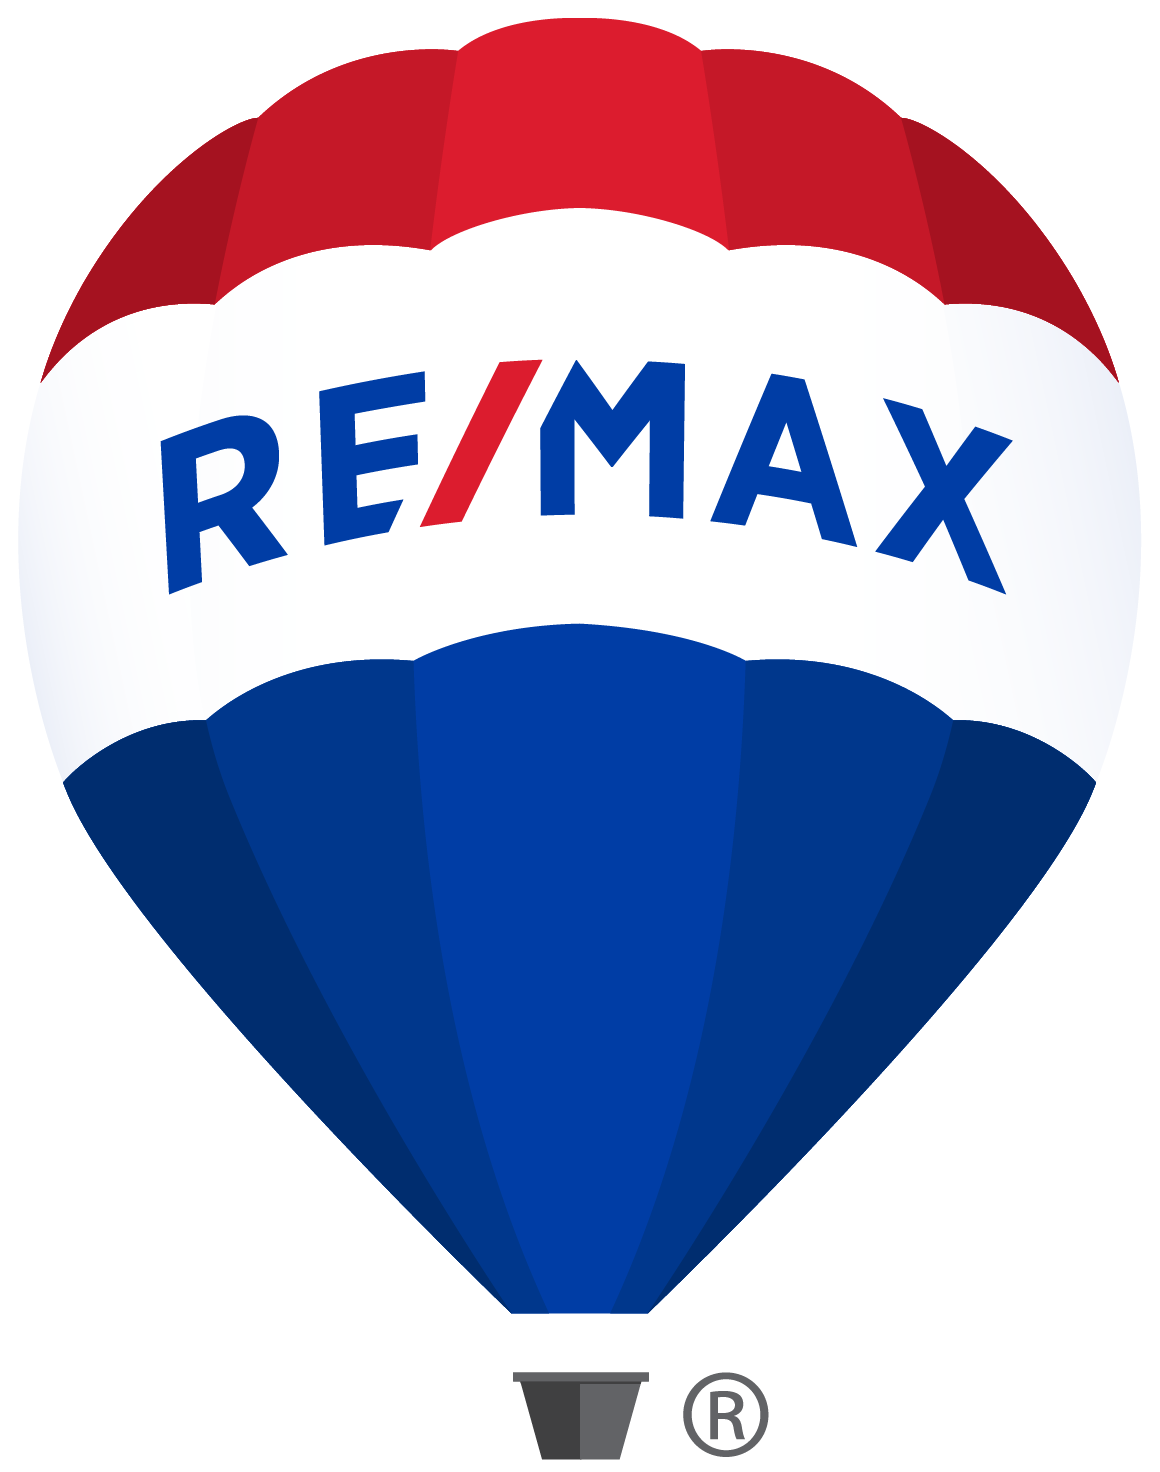 remax columbus ohio realtors balloon